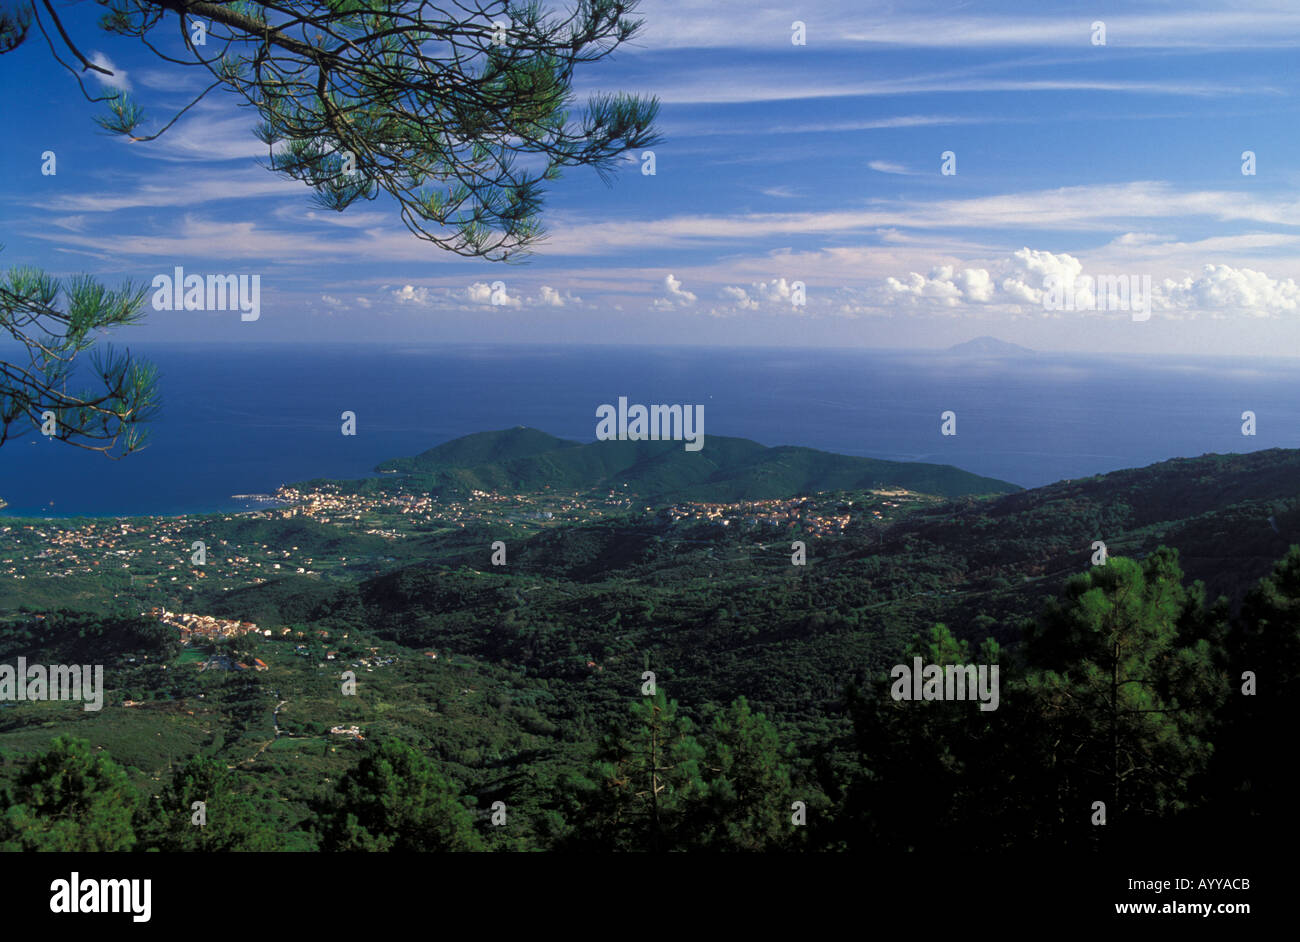 Blick vom Berg auf der Rückseite in Richtung Golf Golfo di Campo Insel Monte Christo Insel Elba Italien Stockfoto